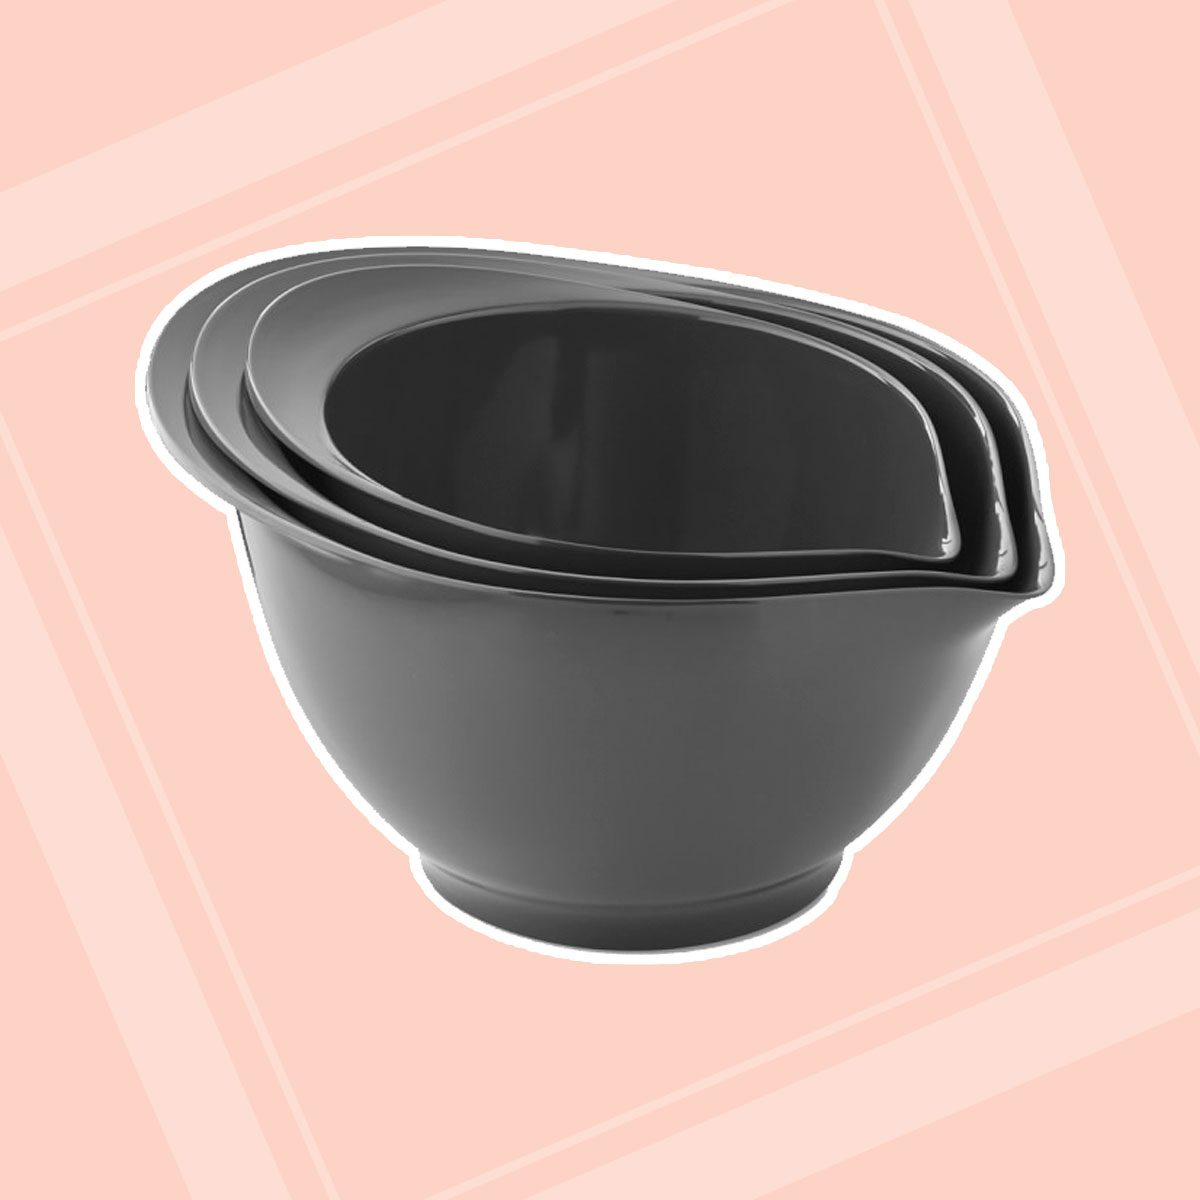 https://www.tasteofhome.com/wp-content/uploads/2021/05/melamine-mixing-bowls.jpg?fit=700%2C700